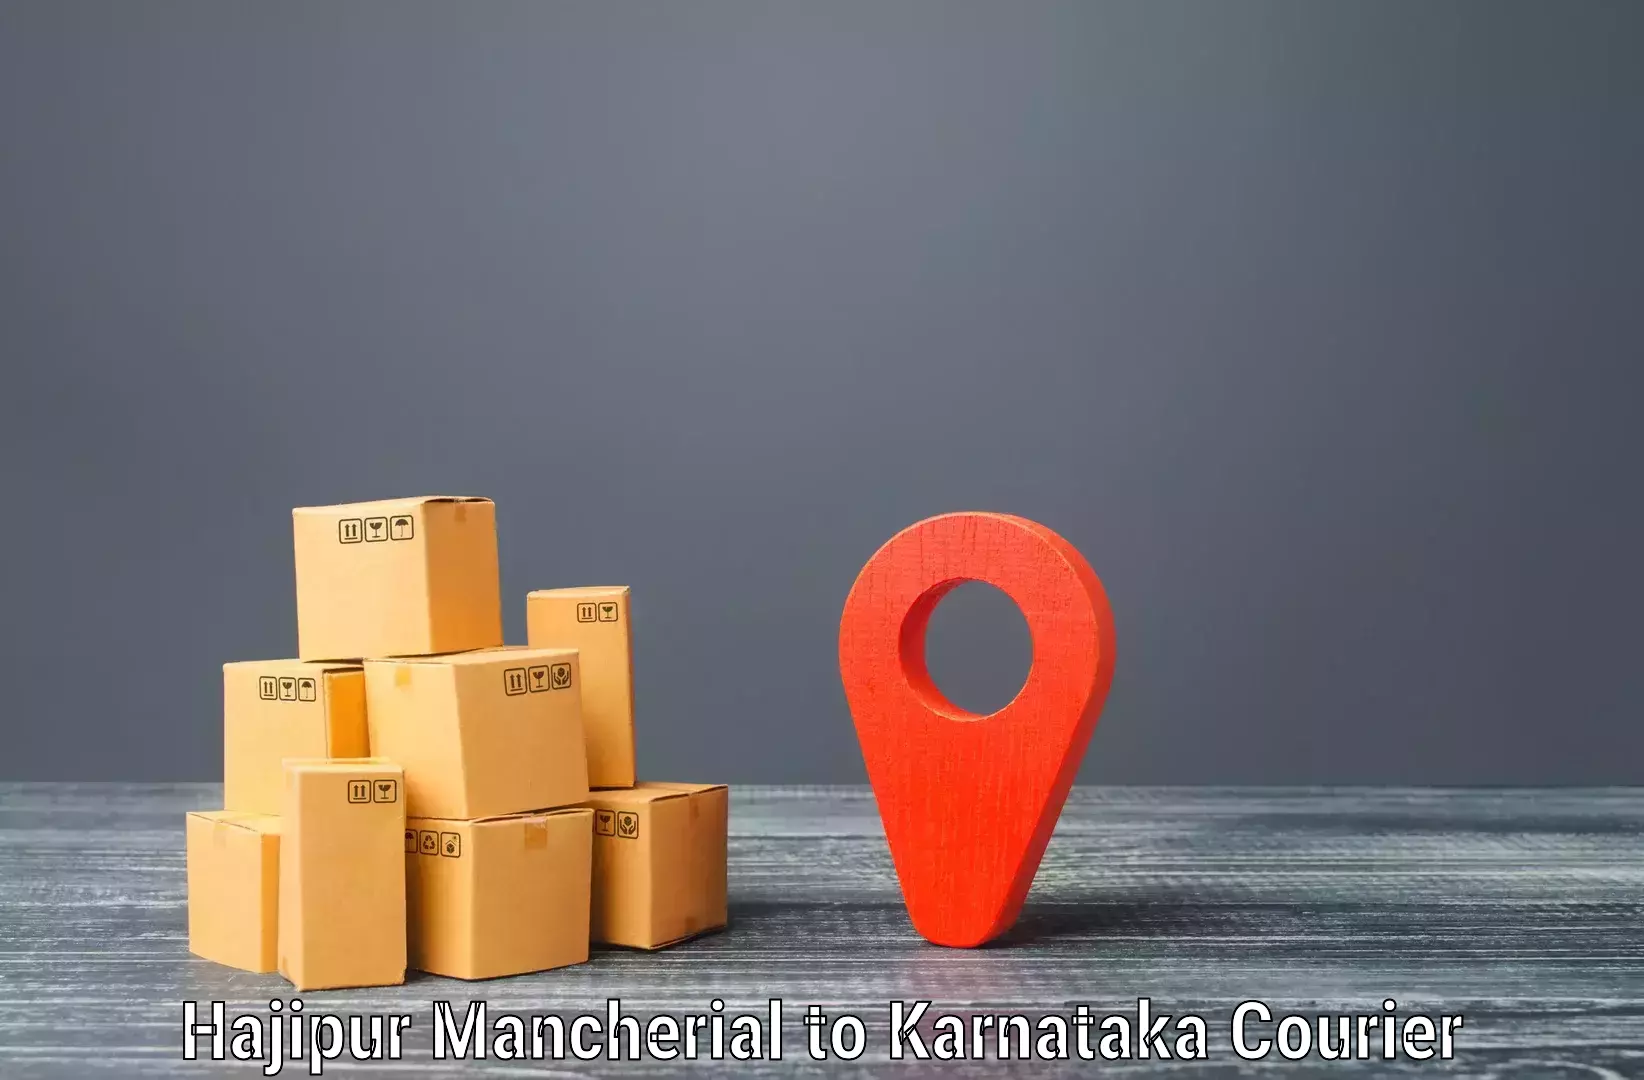 Bulk courier orders Hajipur Mancherial to Kadur